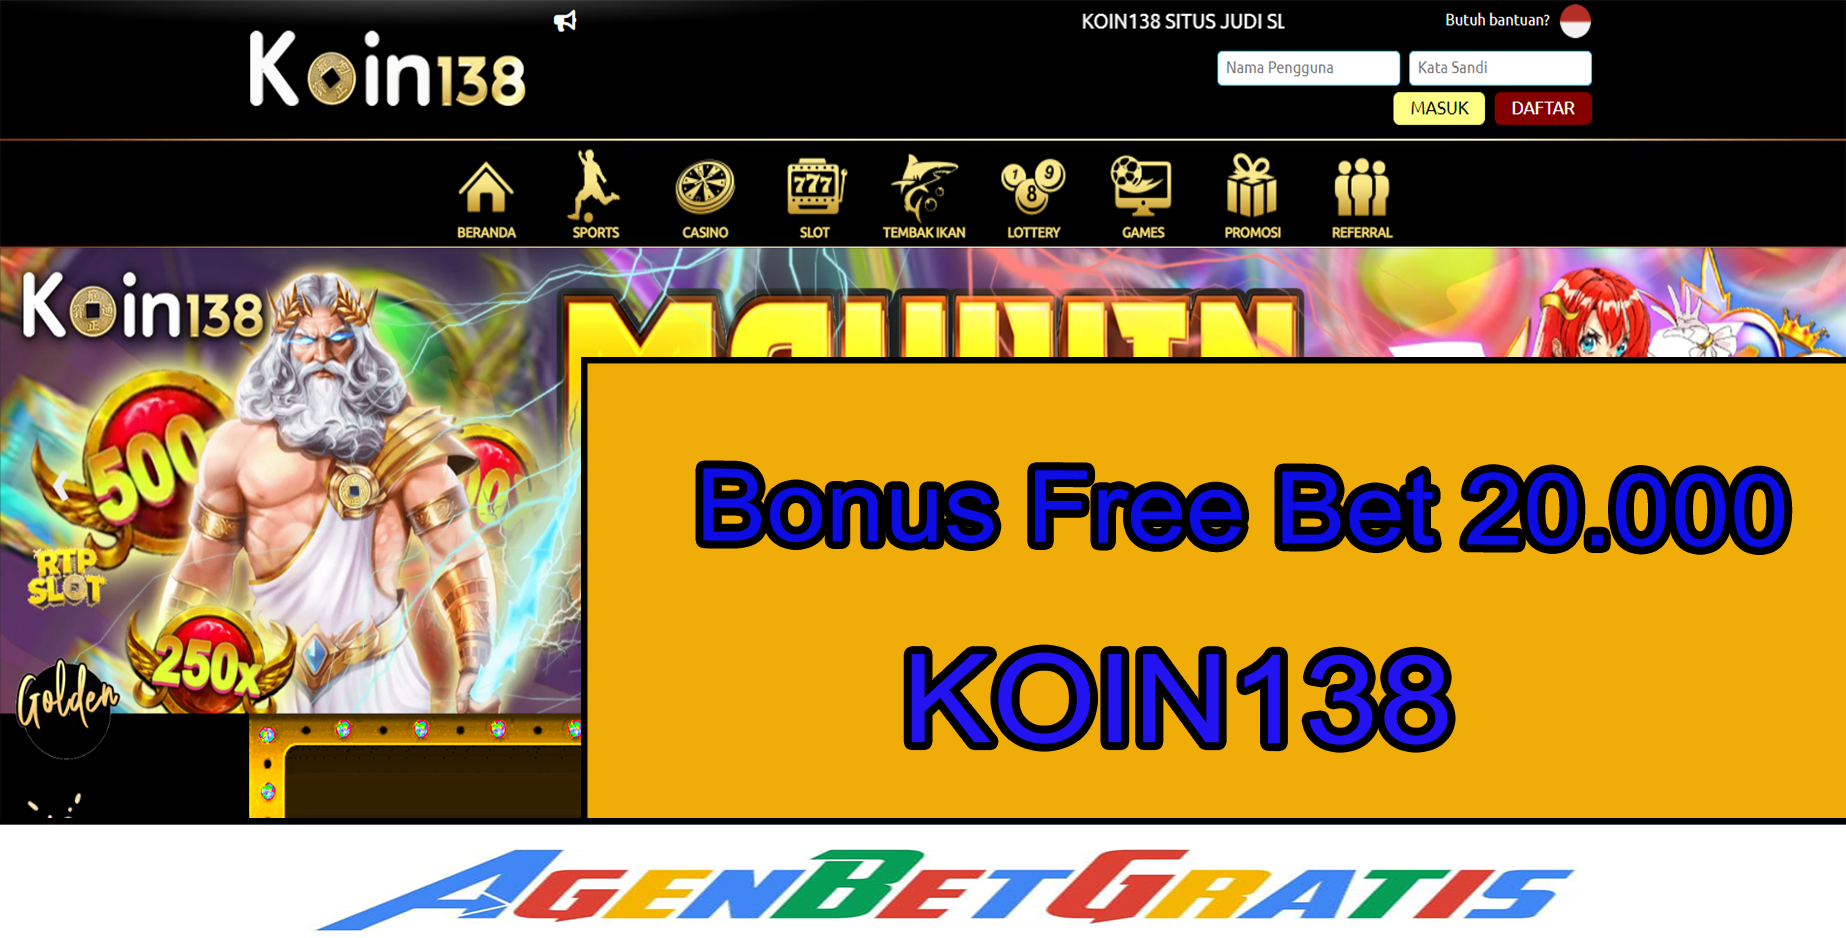 KOIN138 - Bonus FreeBet 20.000